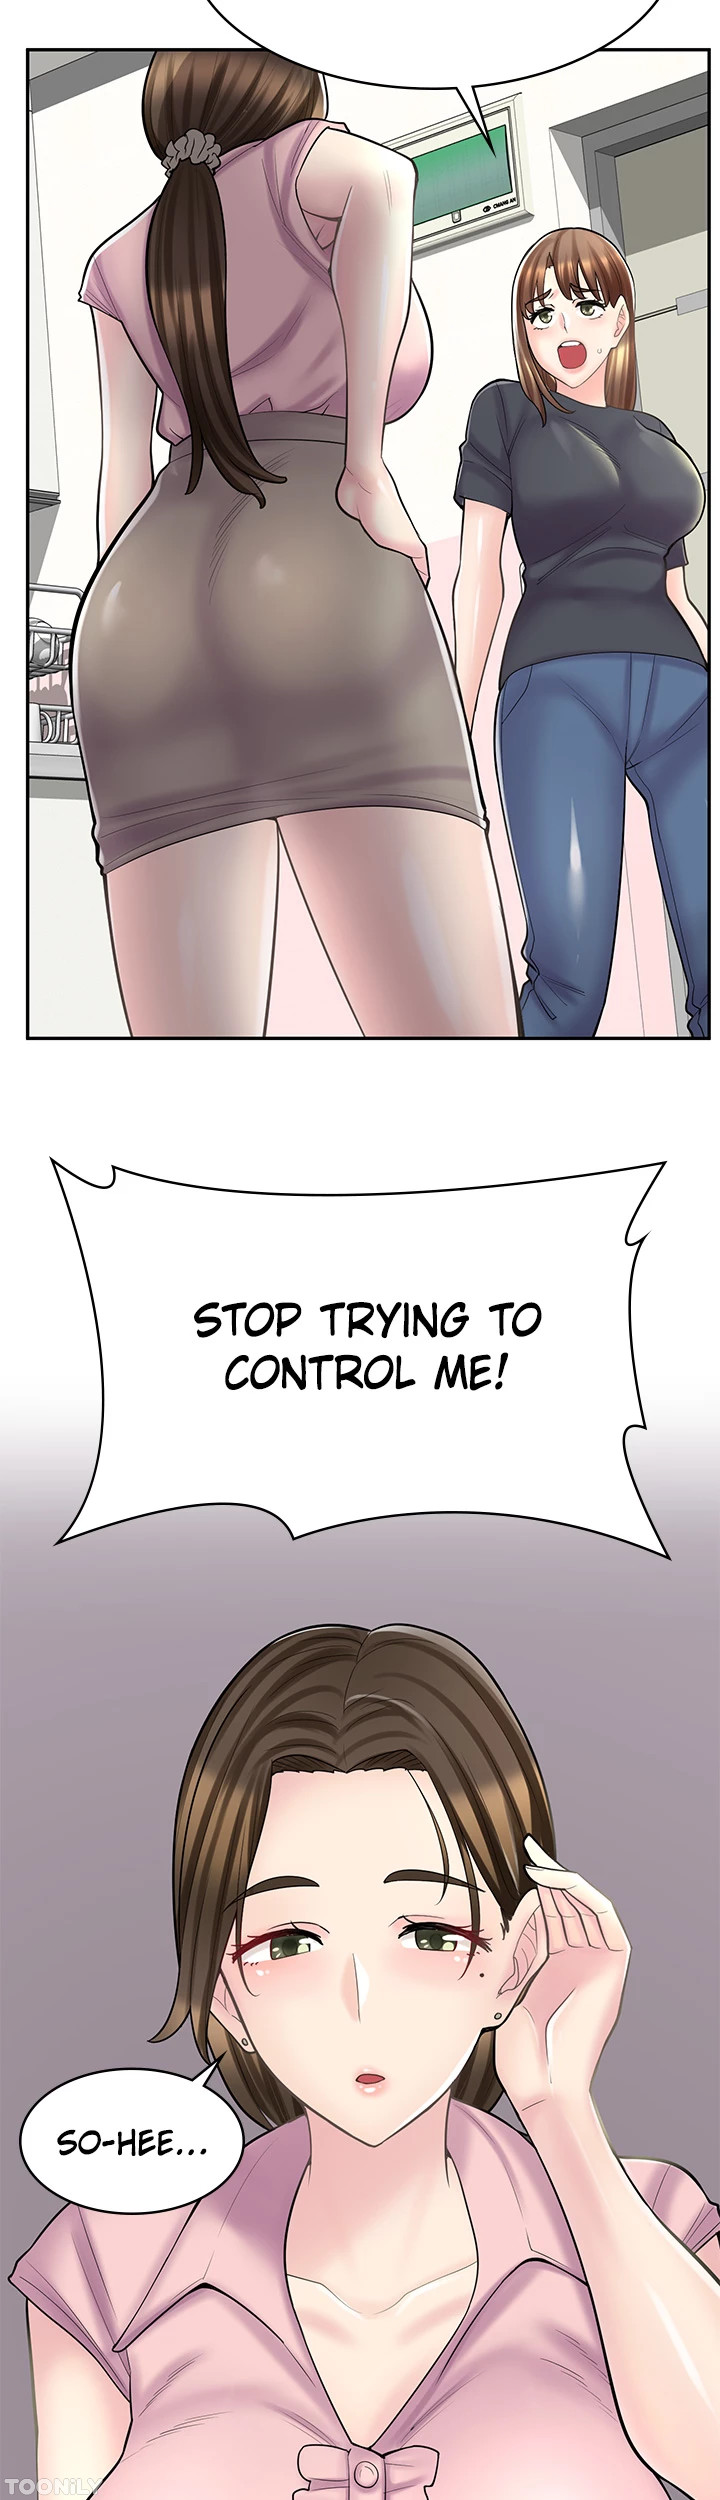 Erotic Manga Café Girls - Chapter 22 Page 5